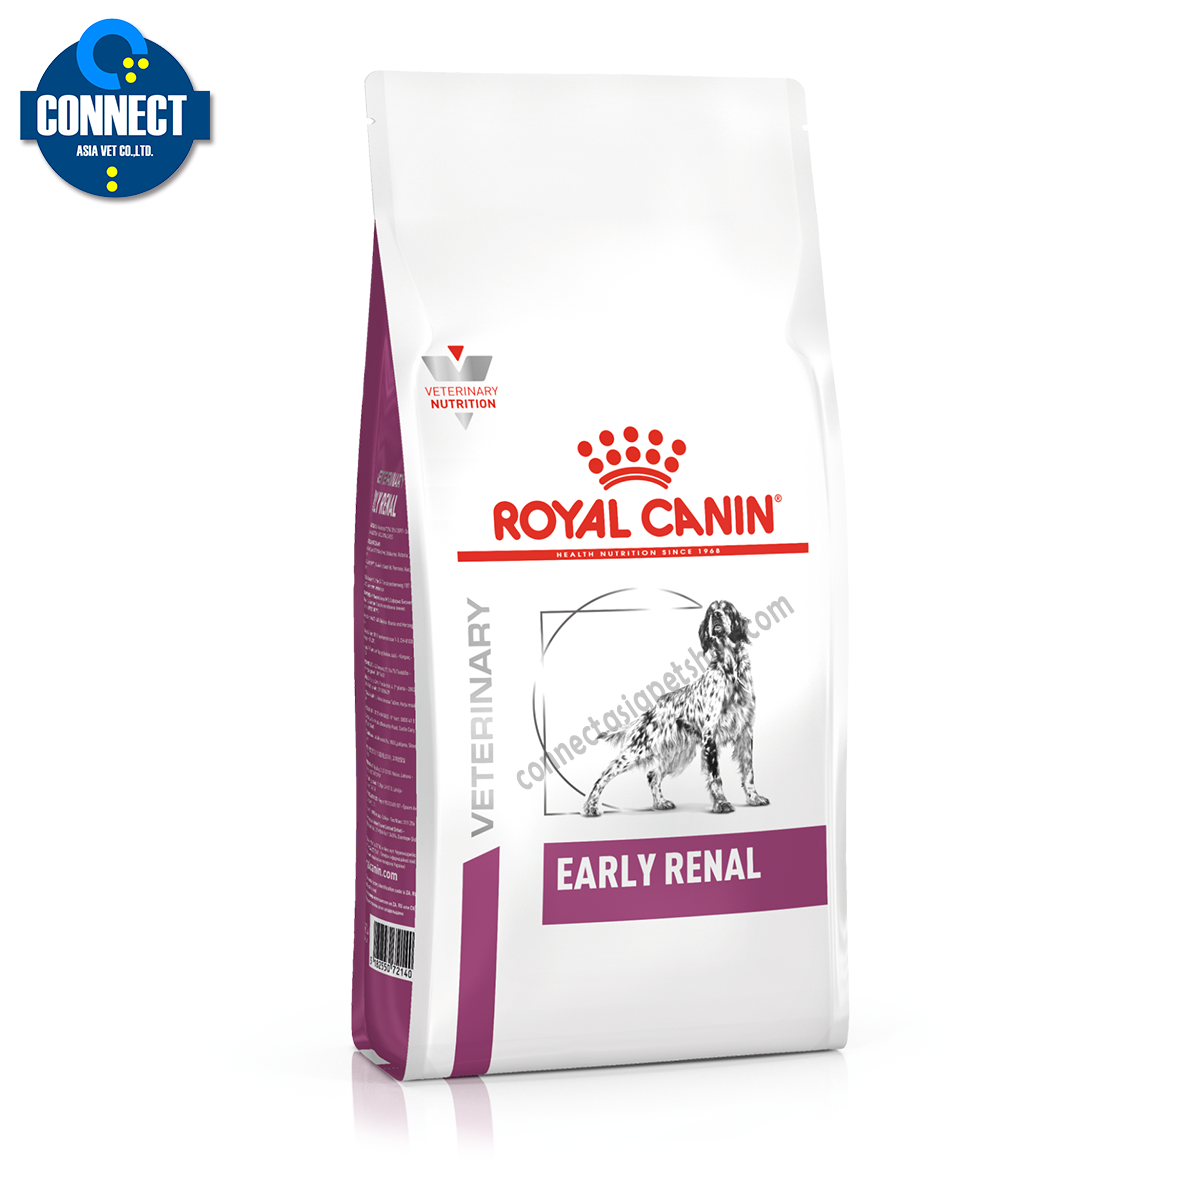 Royal Canin EARLY RENAL สุนัขโรคไตระยะเริ่มต้น   ขนาดถุง ( 2 kg , 7 kg )